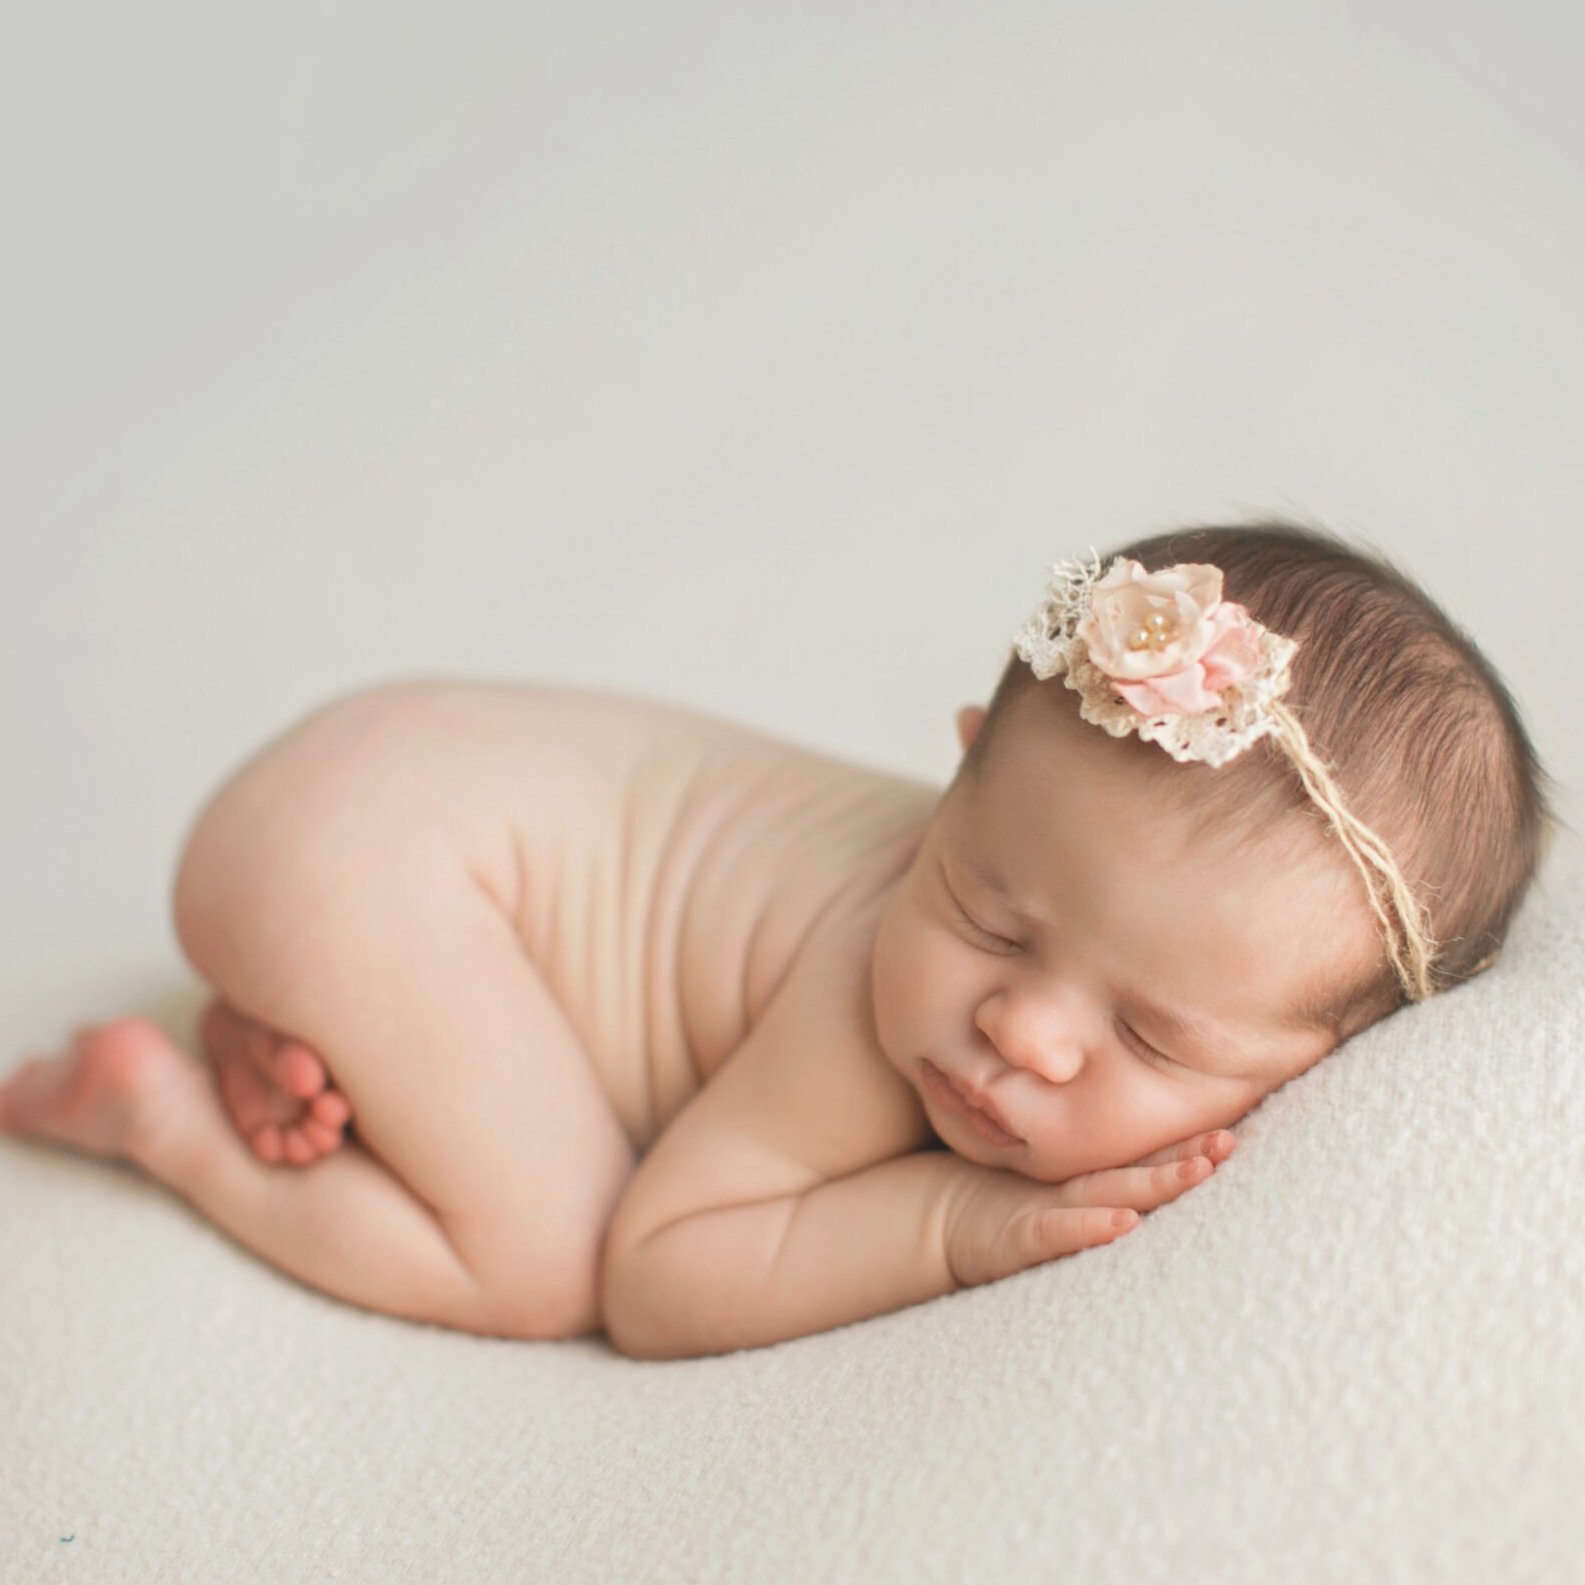 0 to 4 month old newborn sleep | The Peaceful Sleeper